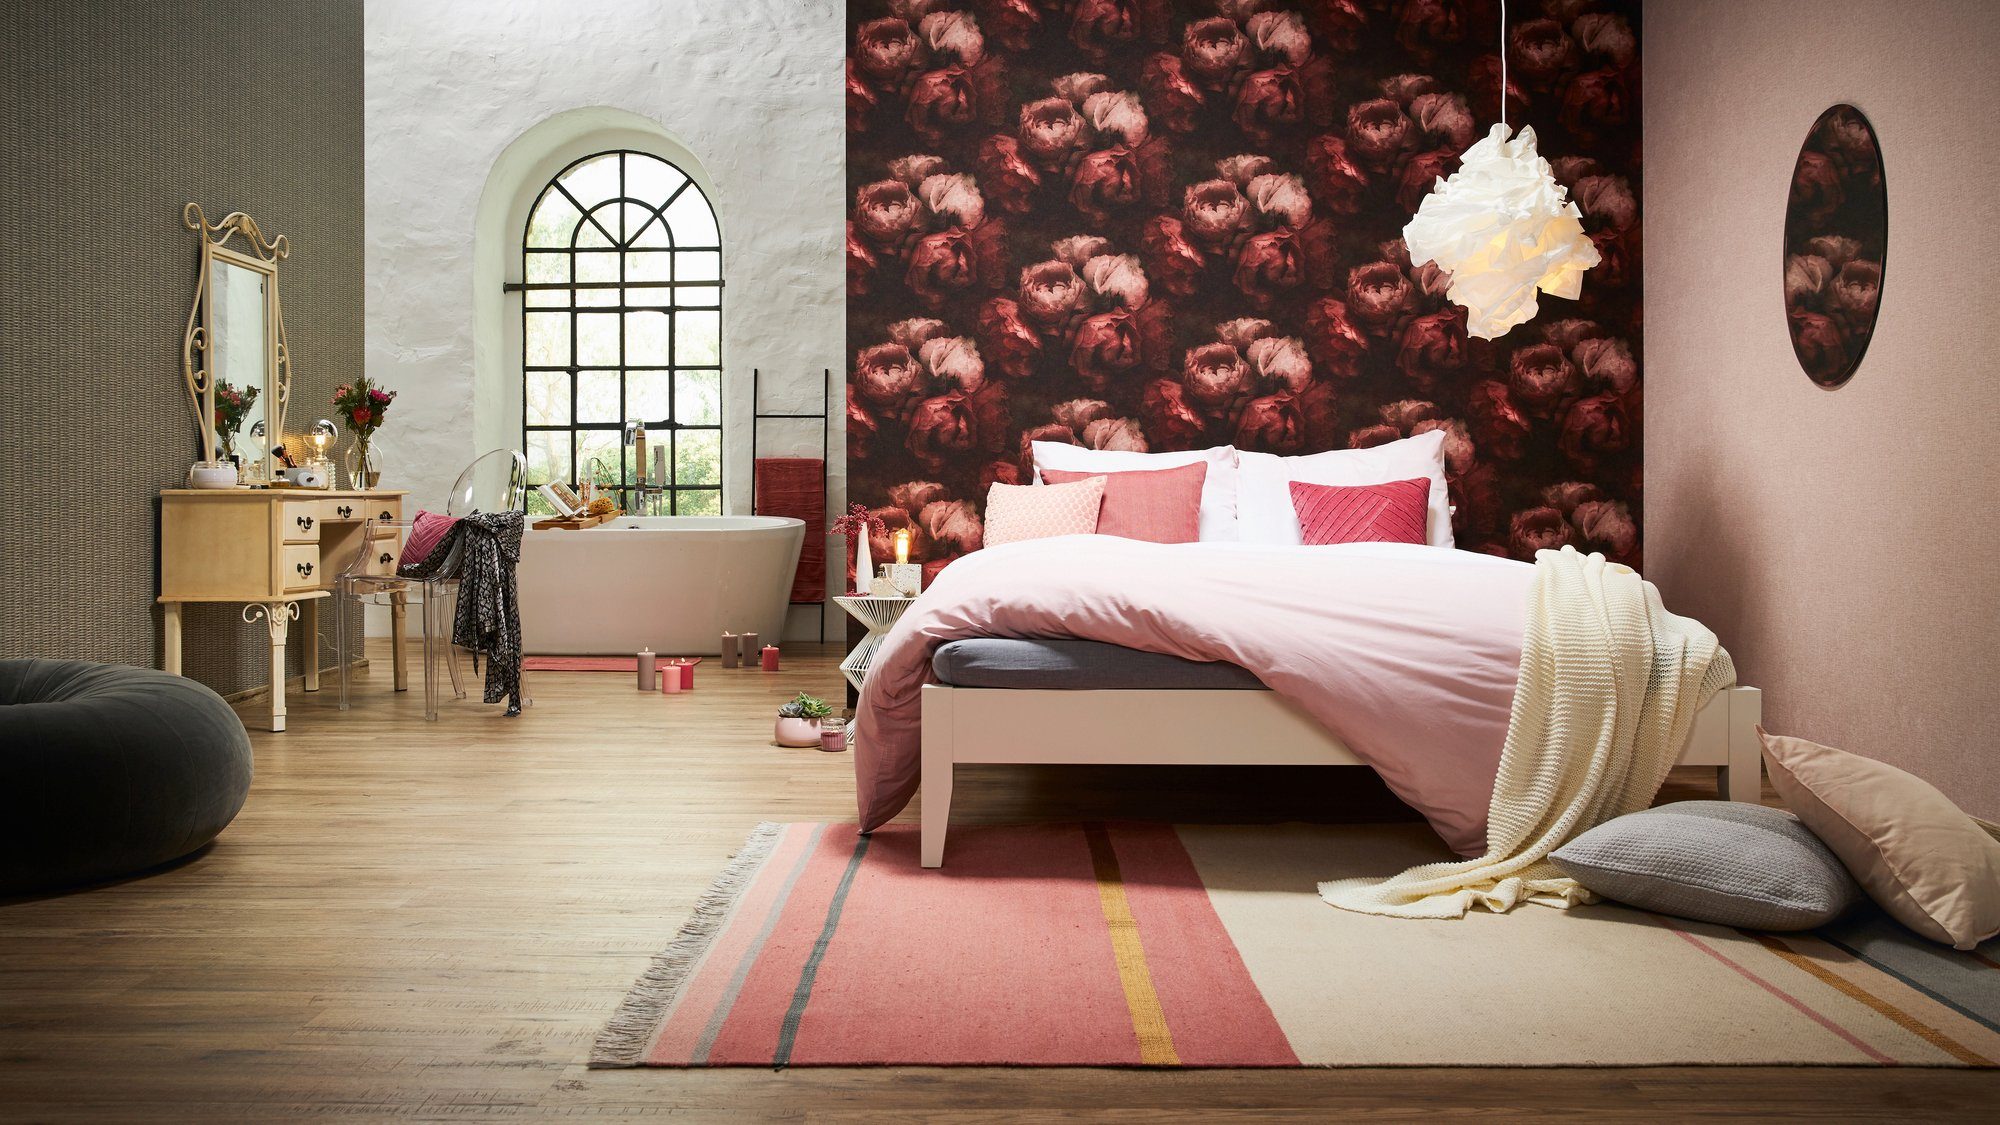 New floral, Vliestapete Création Walls Rosen, Dream Tapete rot walls Blumen living romantischen A.S. mit Romantic